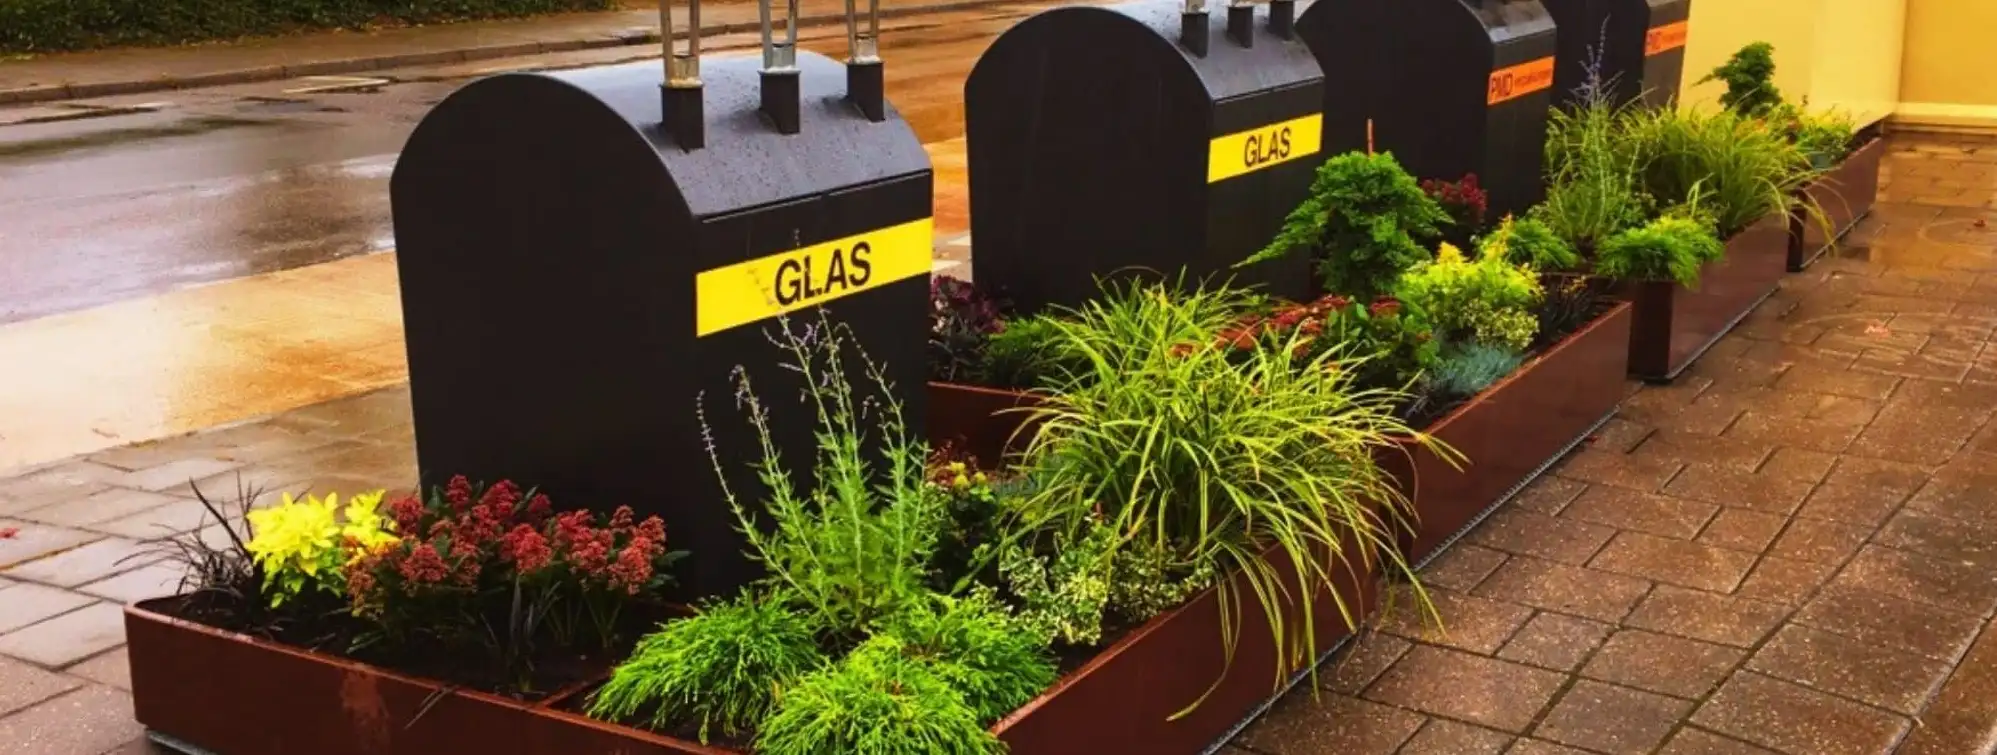 jardiniere urbaine collectivités zone dechets enterres reactis journee recyclage